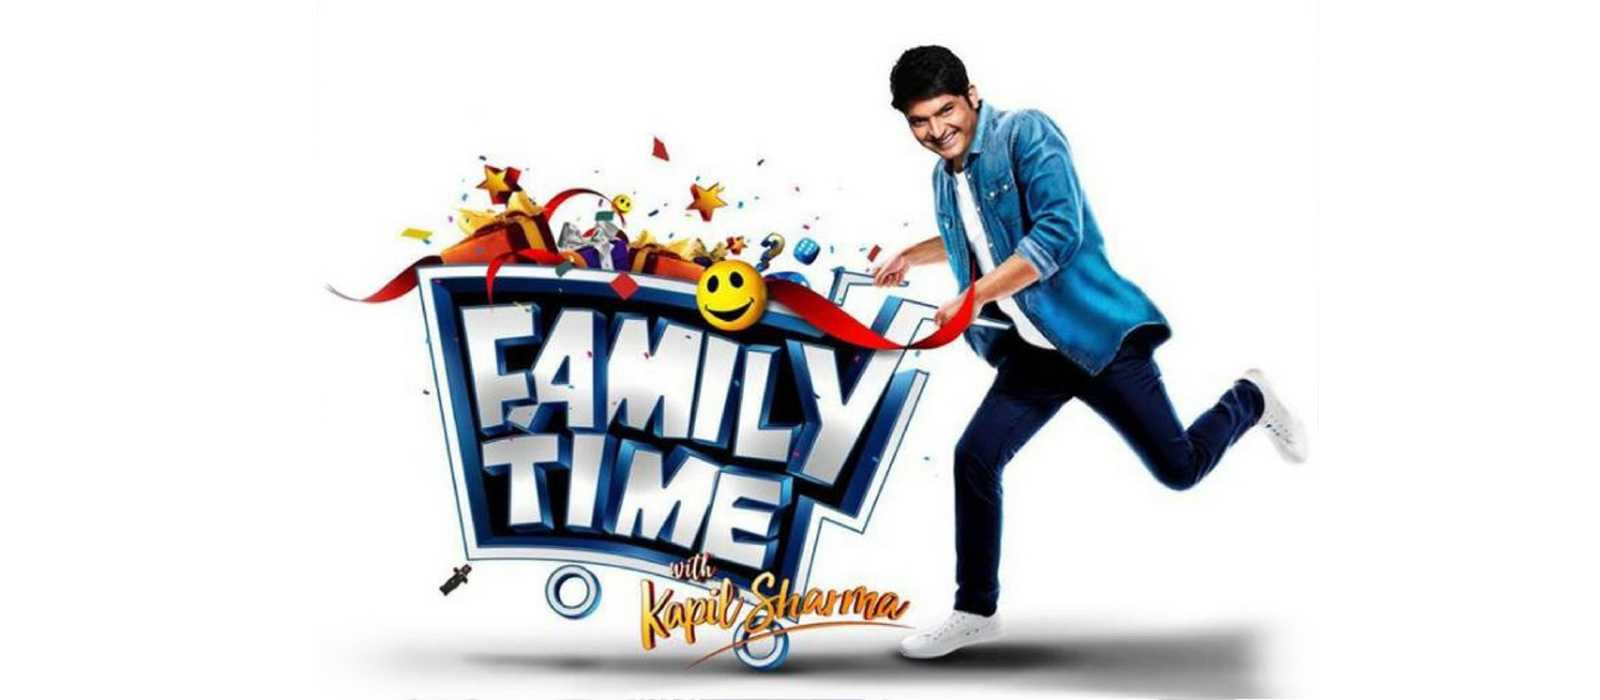 Family Time with Kapil Sharma